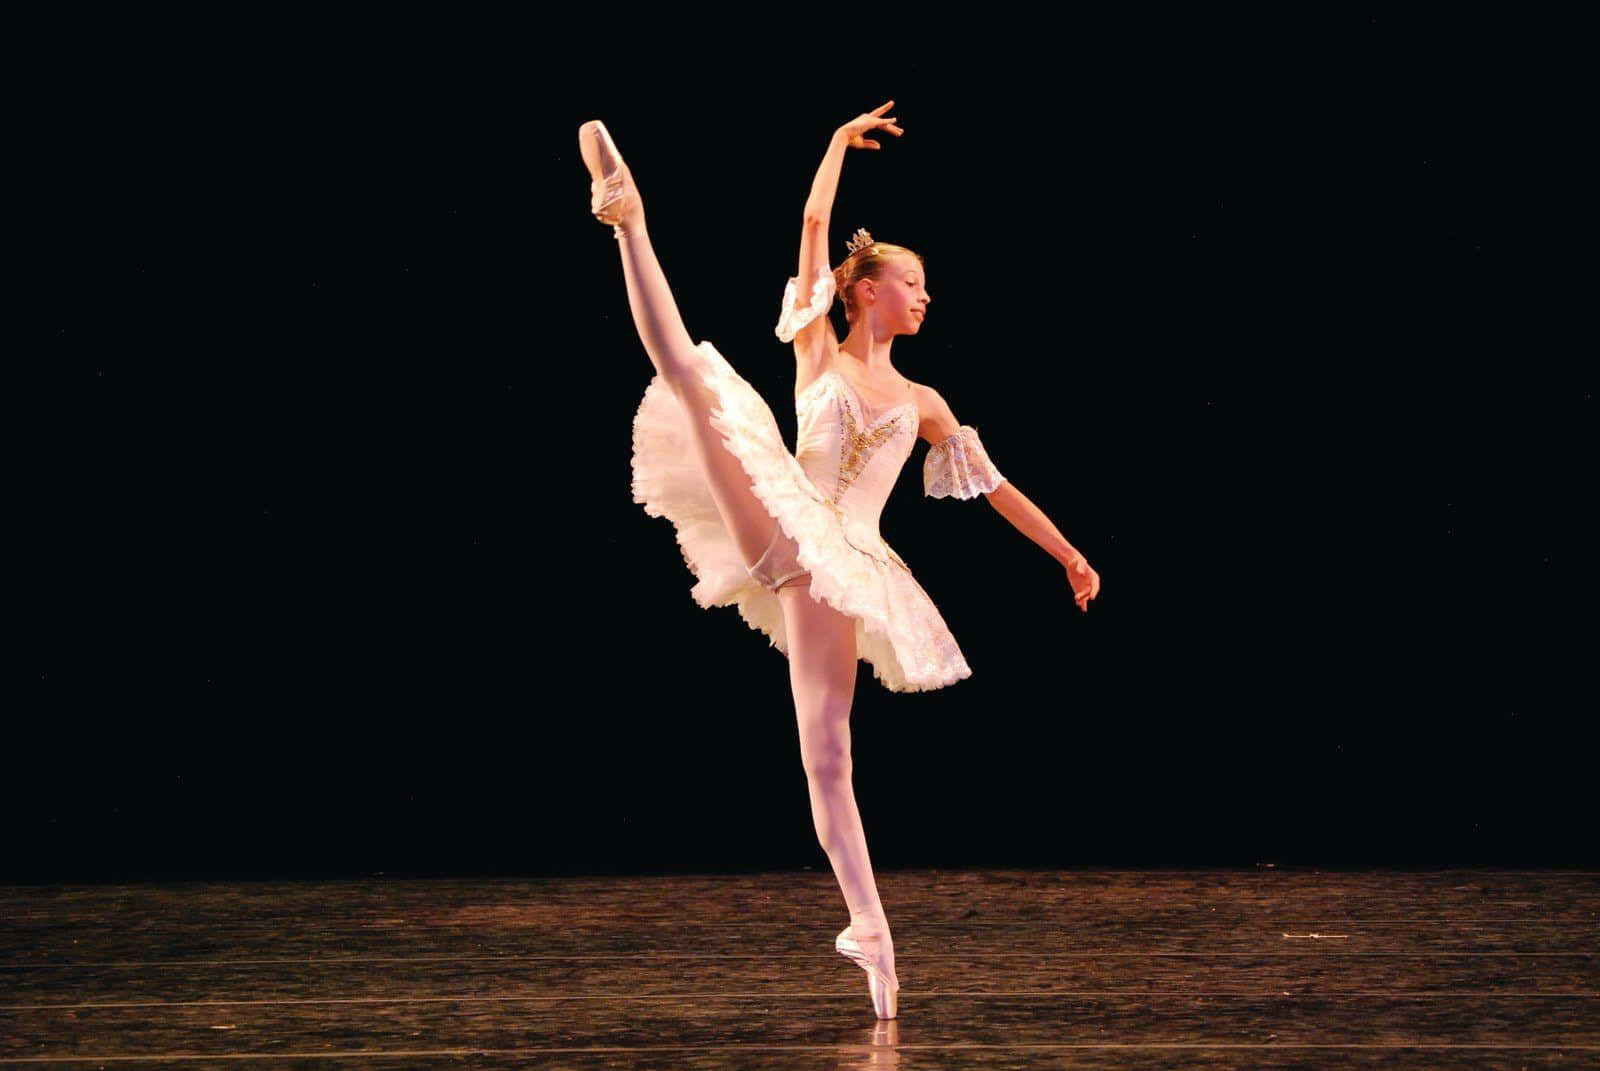 Professional Ballet Dancer in Rehearsal